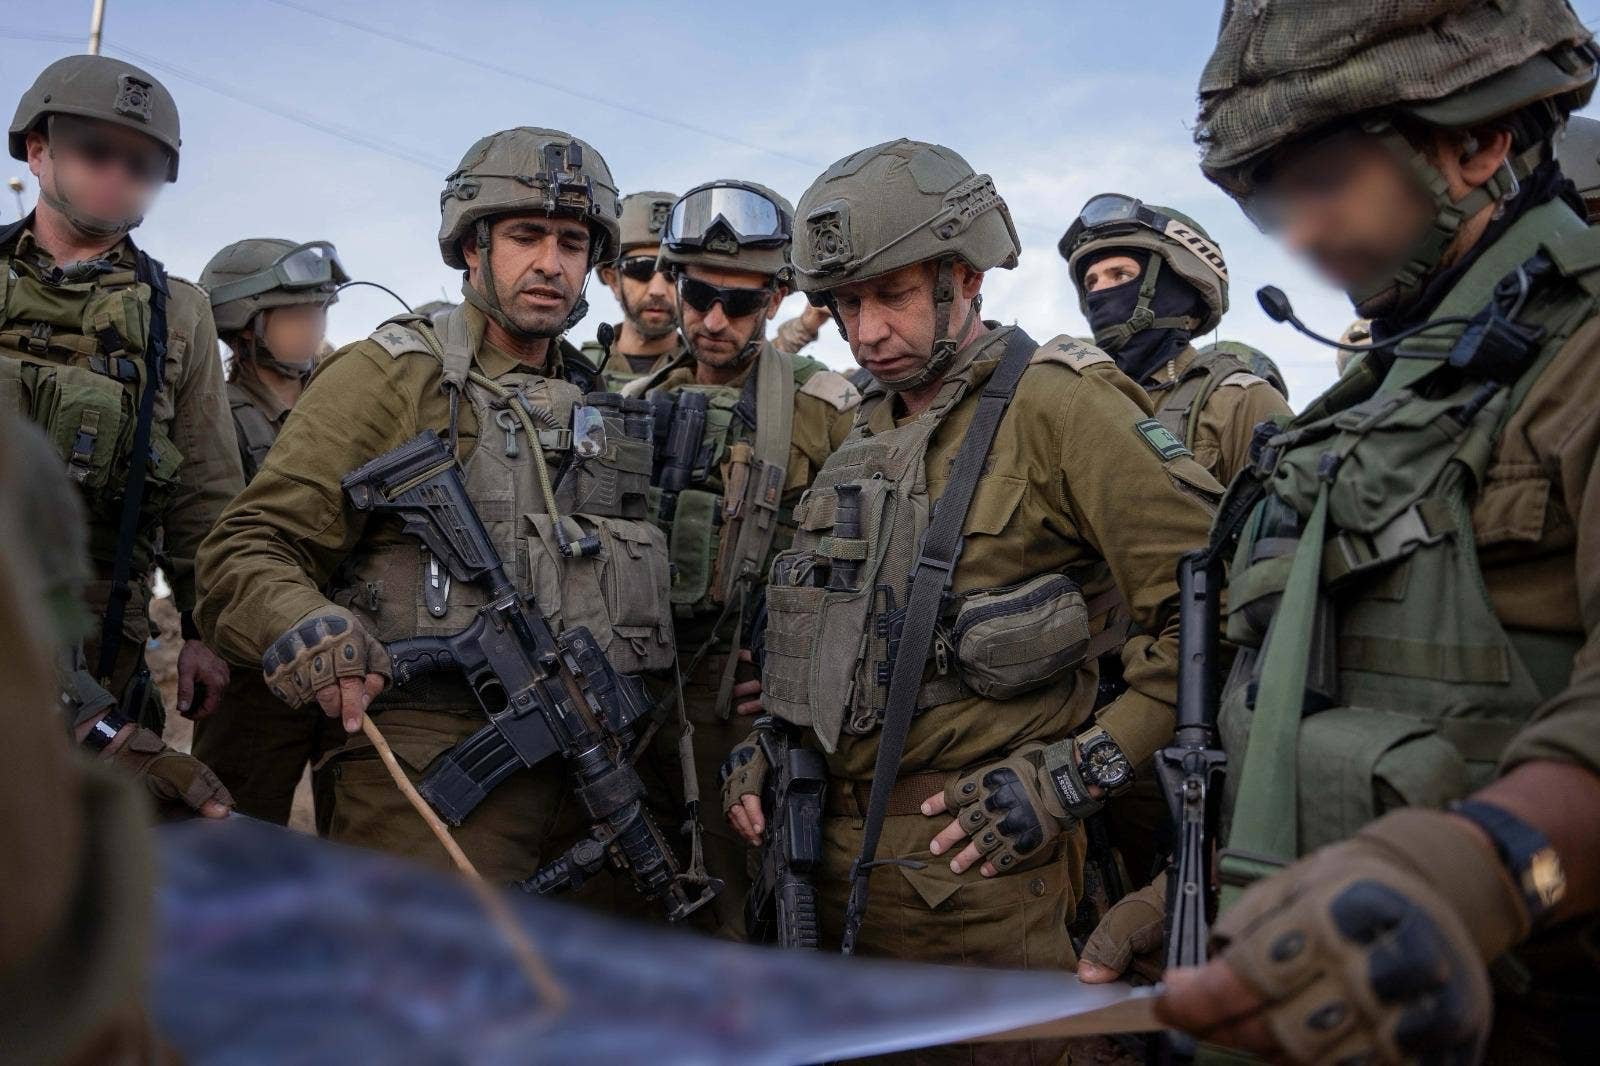 Urban warfare expert says Israeli military taking unprecedented steps to protect Gaza civilians